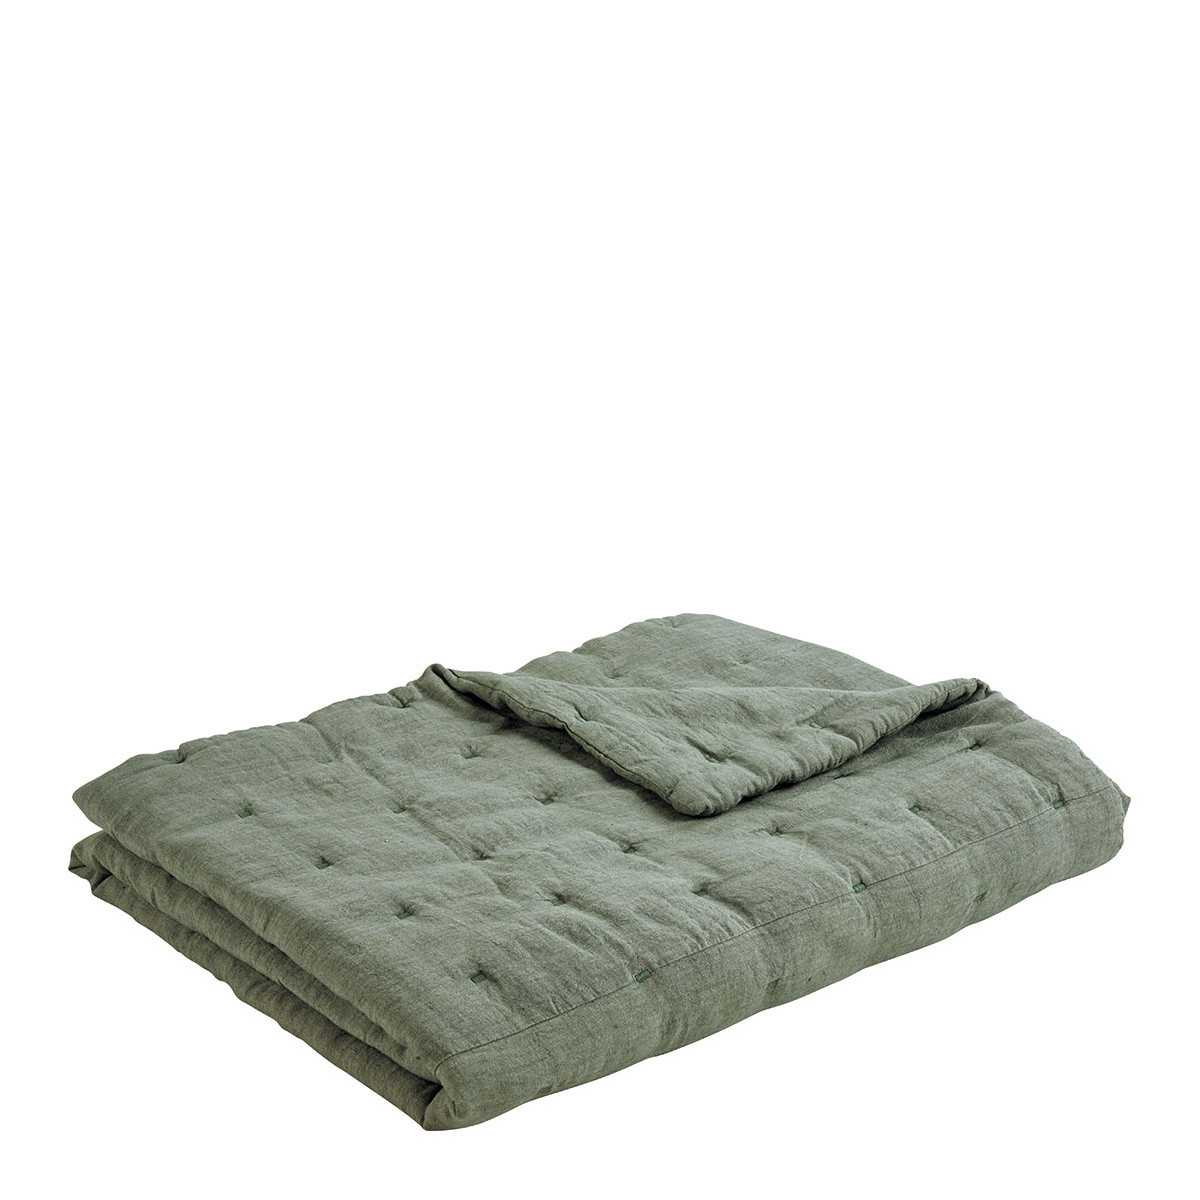 INTERIEUR- DECORATION|Washed-linen bed cover CHLOE - Celadon - 230 x 180 cmBLANC D'IVOIREBedspread